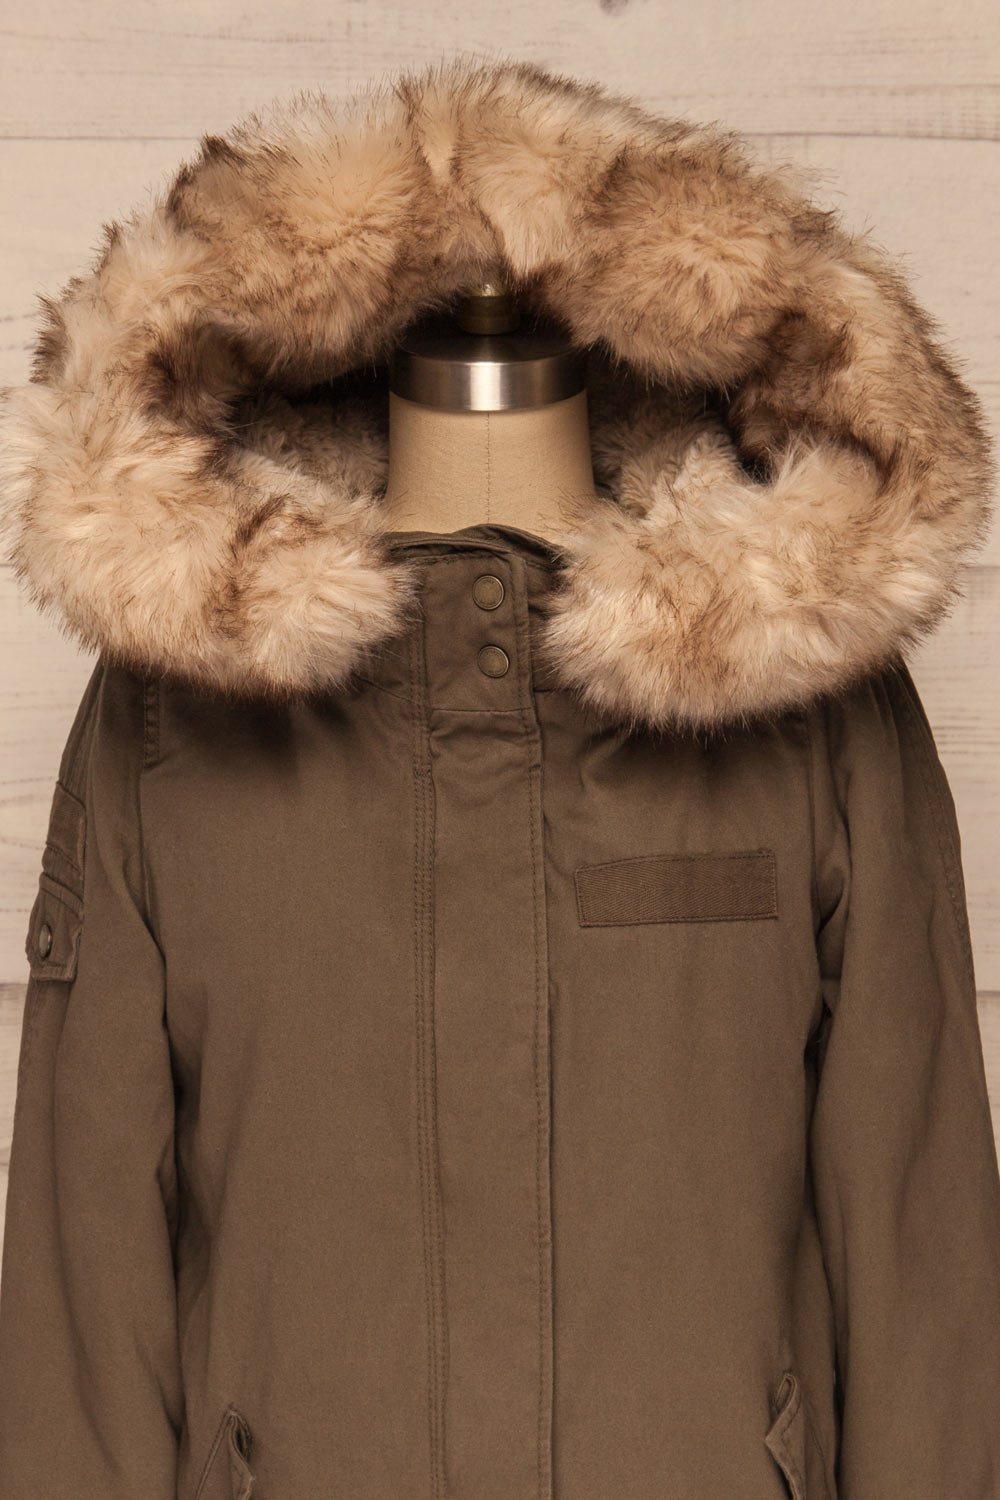 Varna Khaki Parka Coat with Faux Fur Hood | La Petite Garçonne front close-up hood